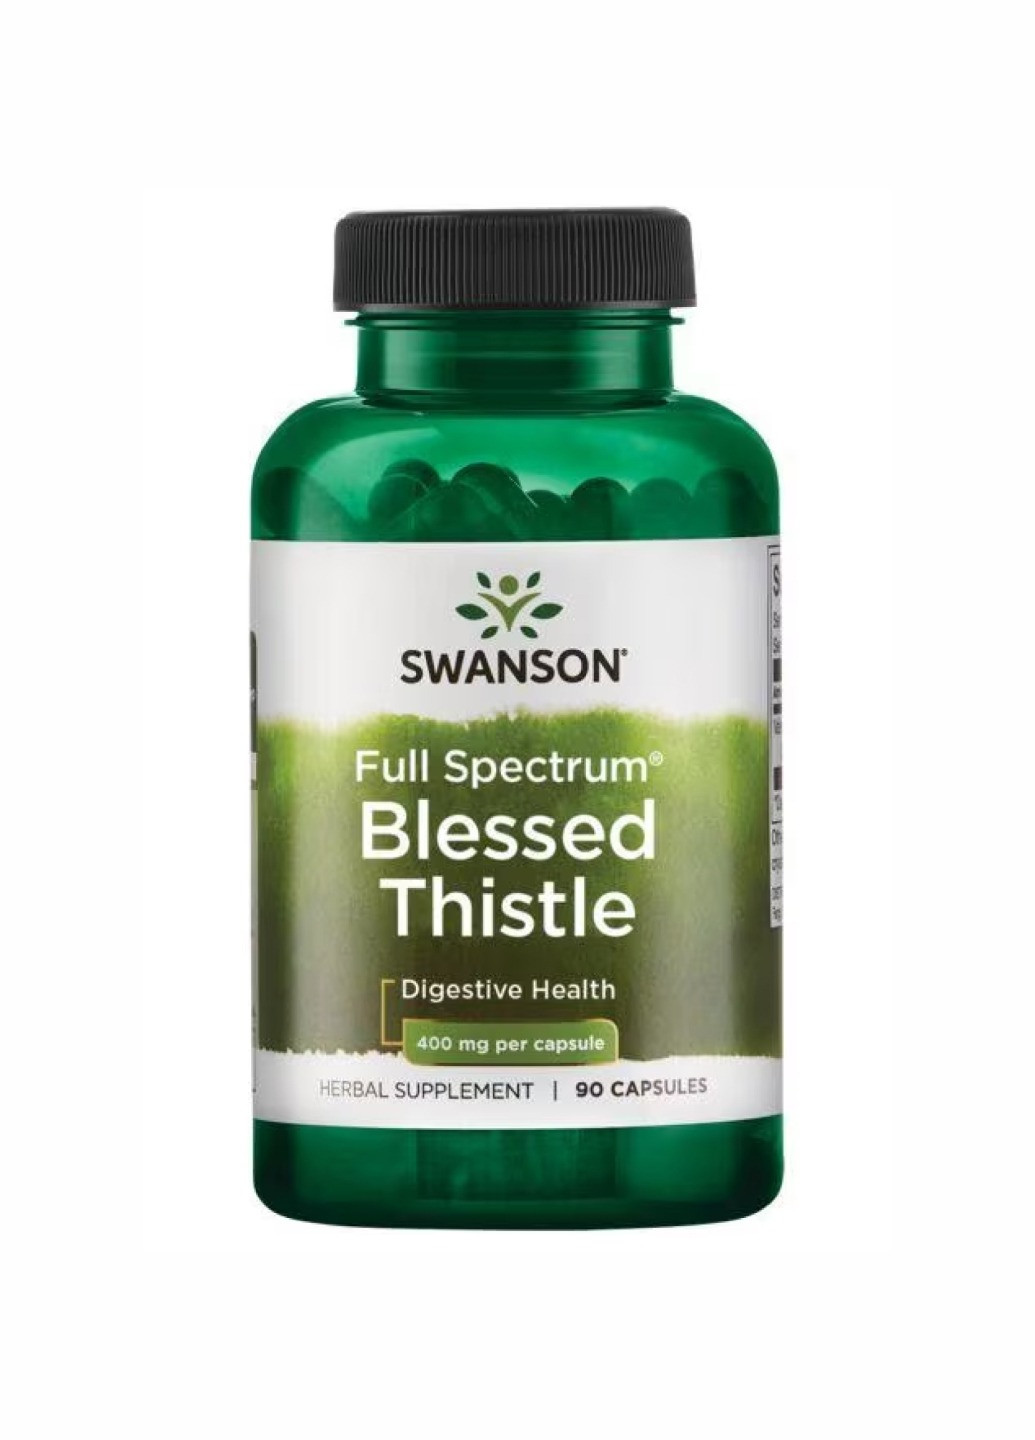 Full Spectrum Blessed Thistle 400 mg - 90caps натуральная добавка для поддержания пищеварения Swanson (260196325)